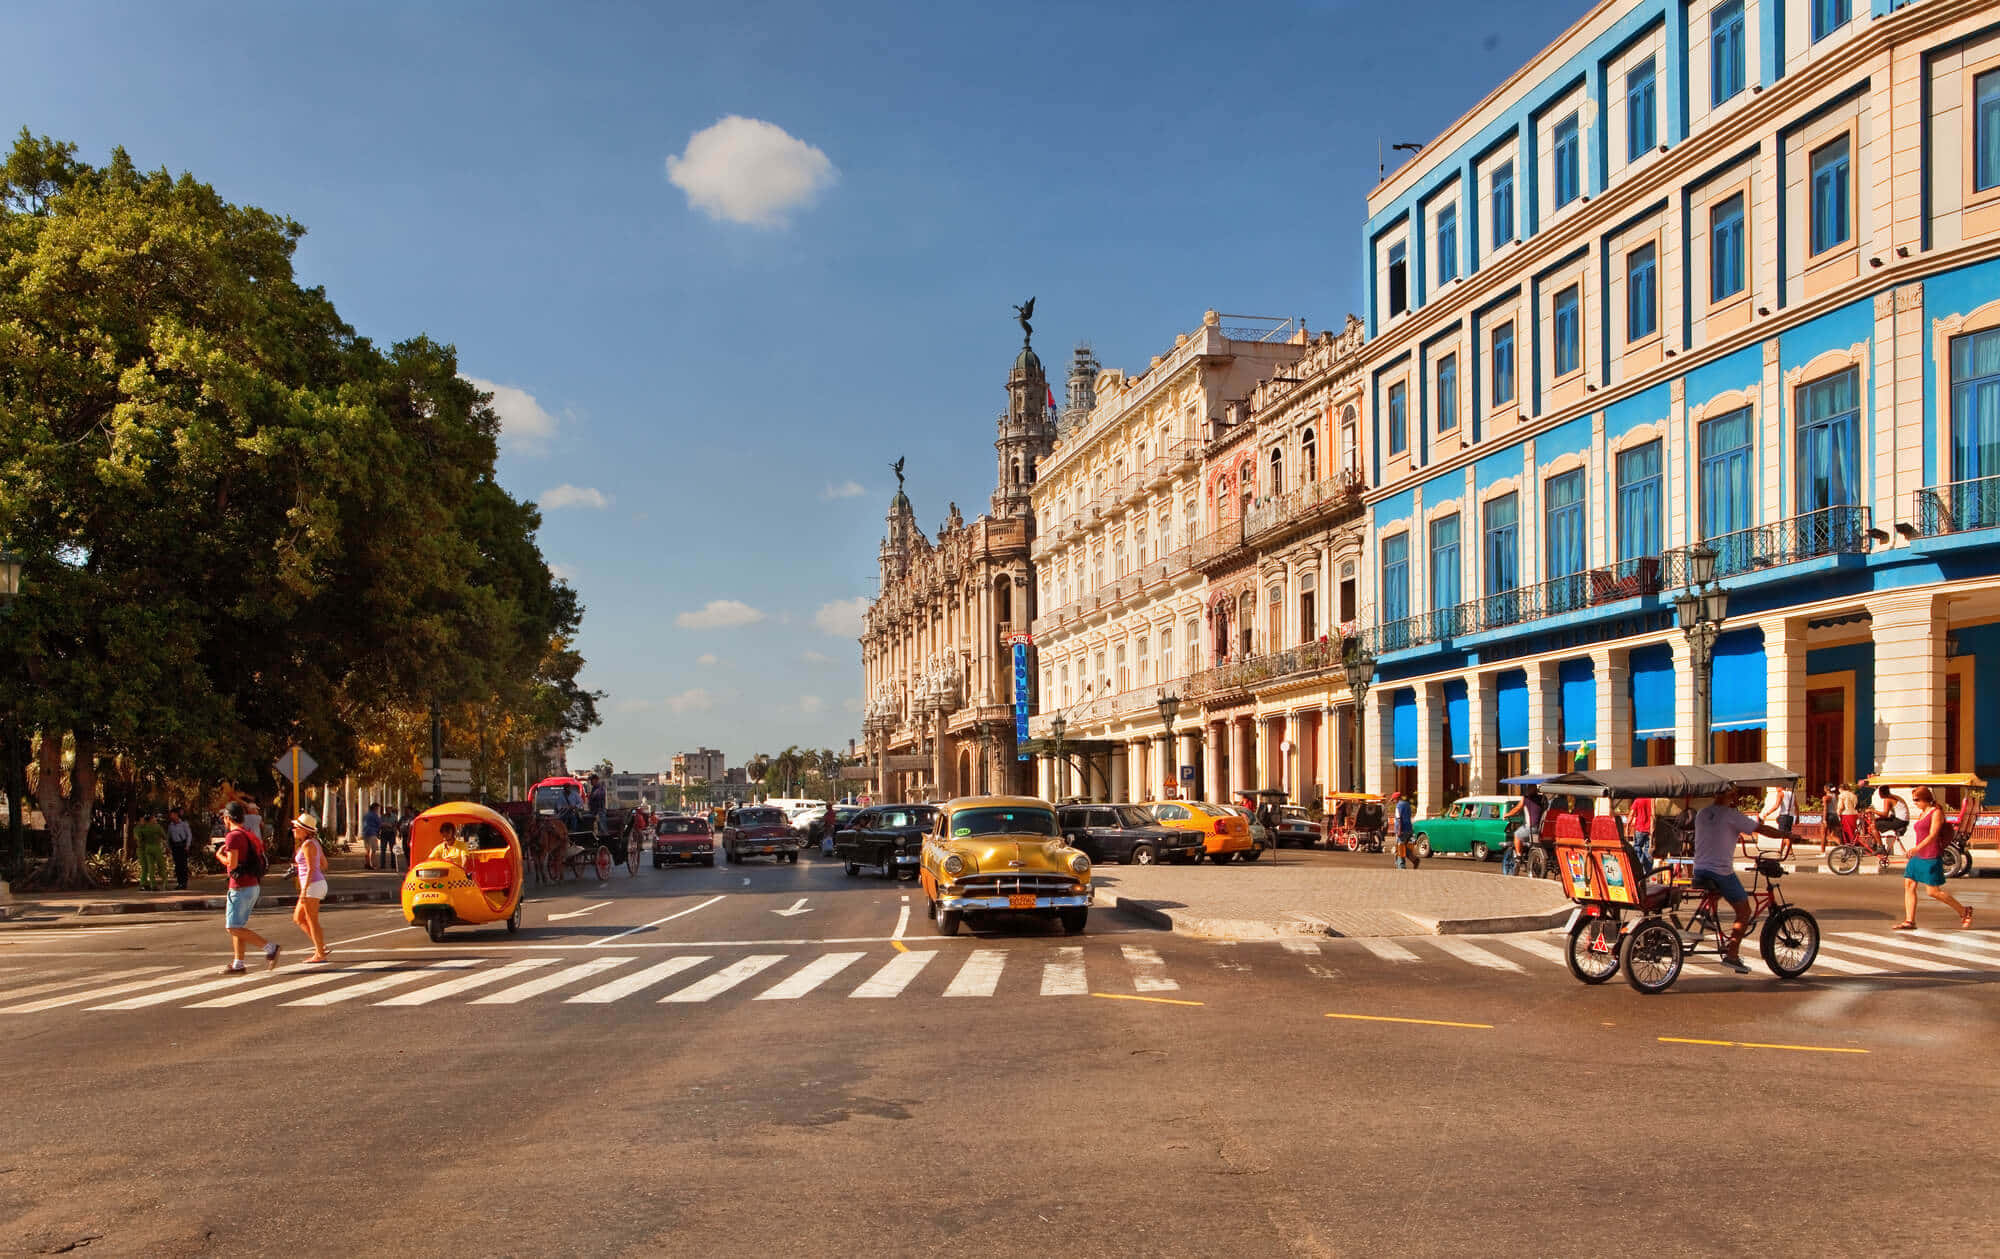 The beauty of Havana, Cuba